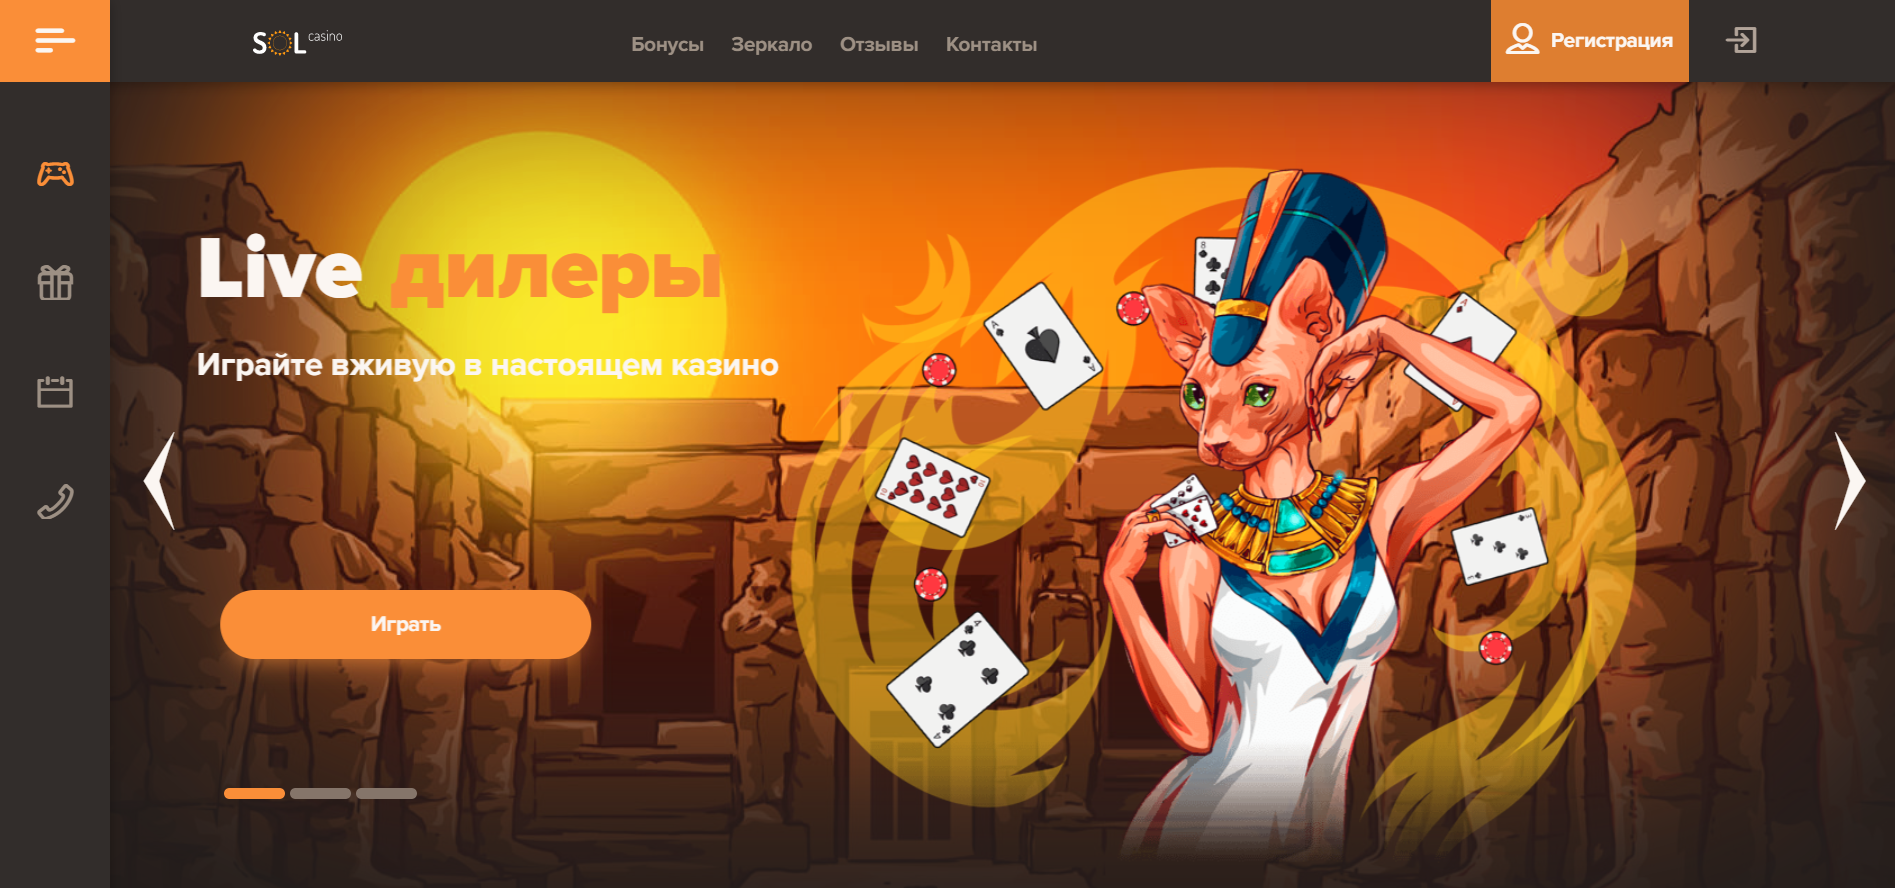 Сол casino официальный сайт онлайн казино шолу kz